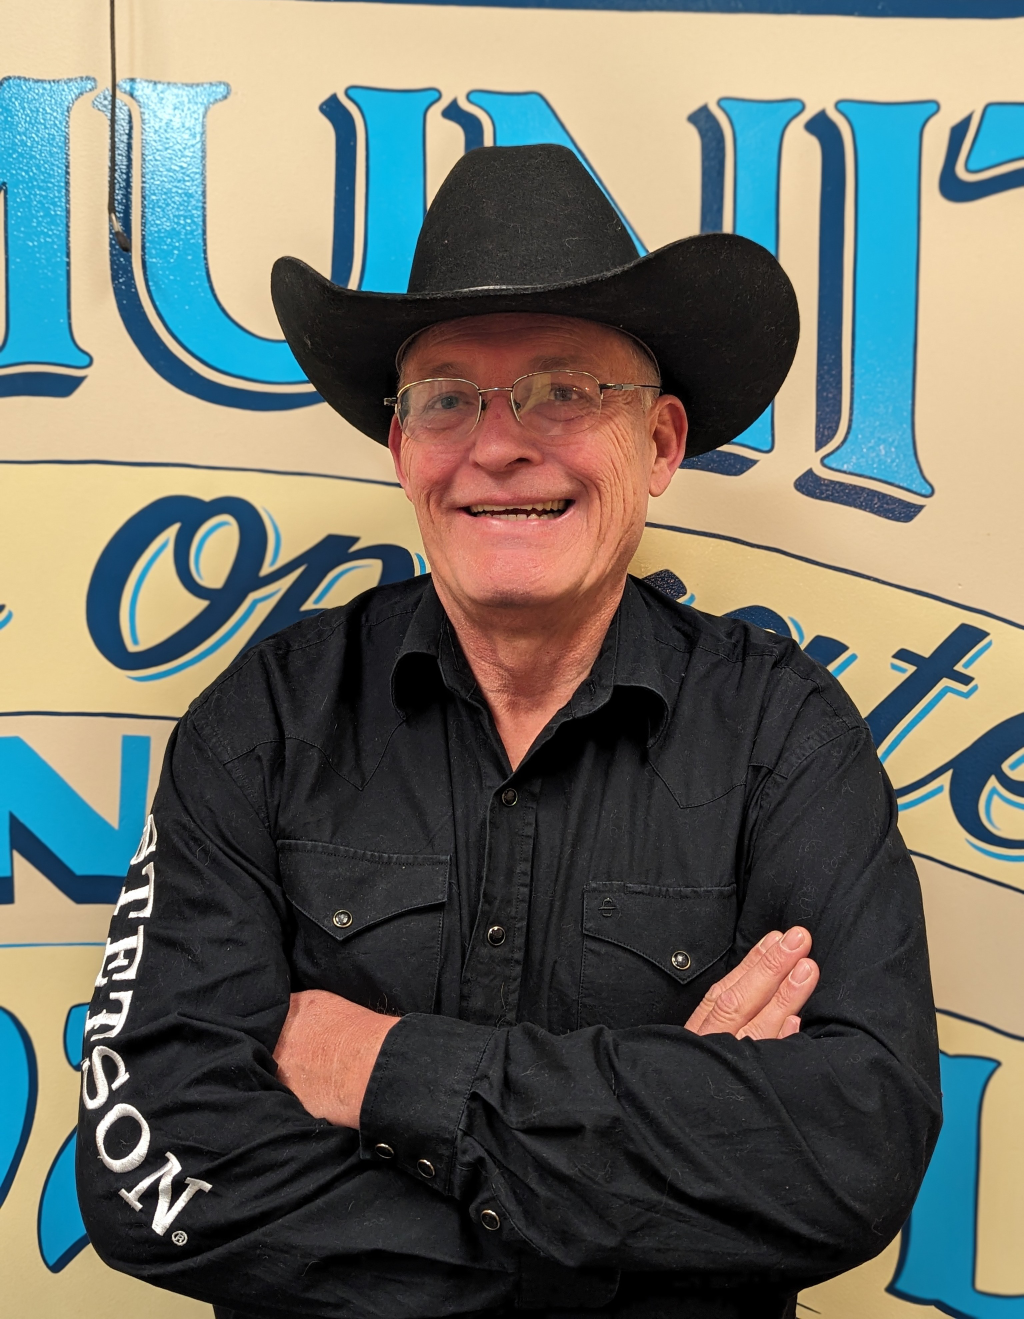 A man smiling wearing a cowboy hat